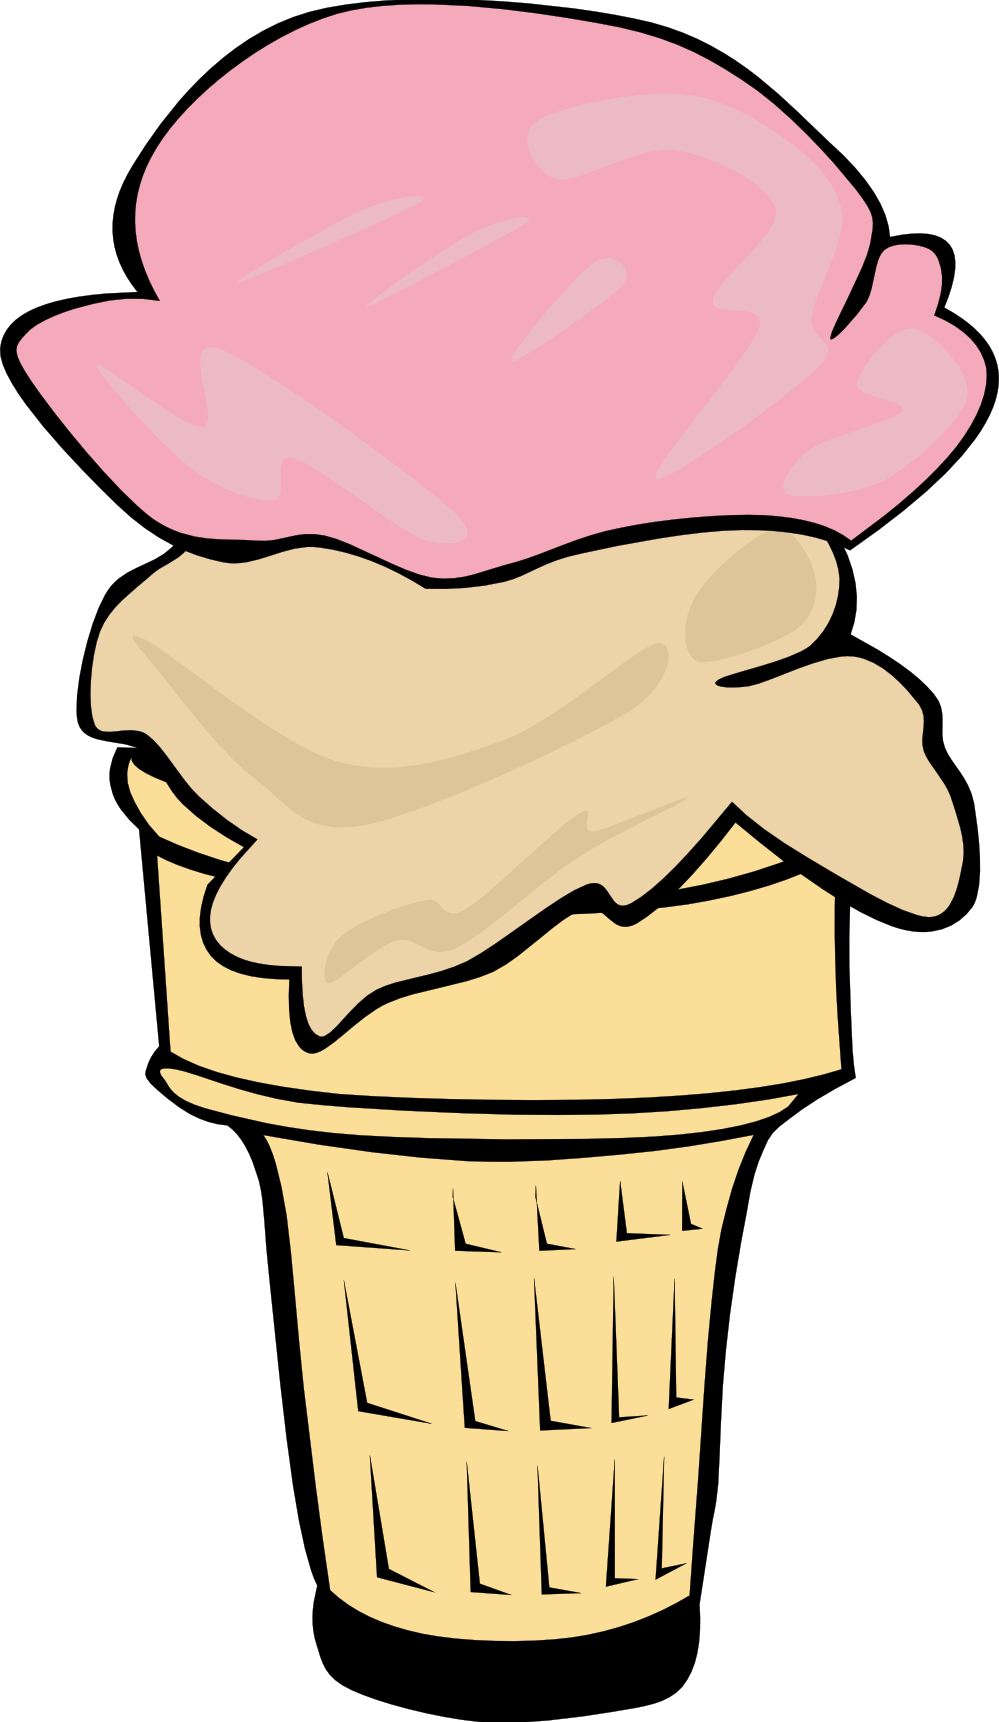 Ice cream cone ice creamne clip art black and white free